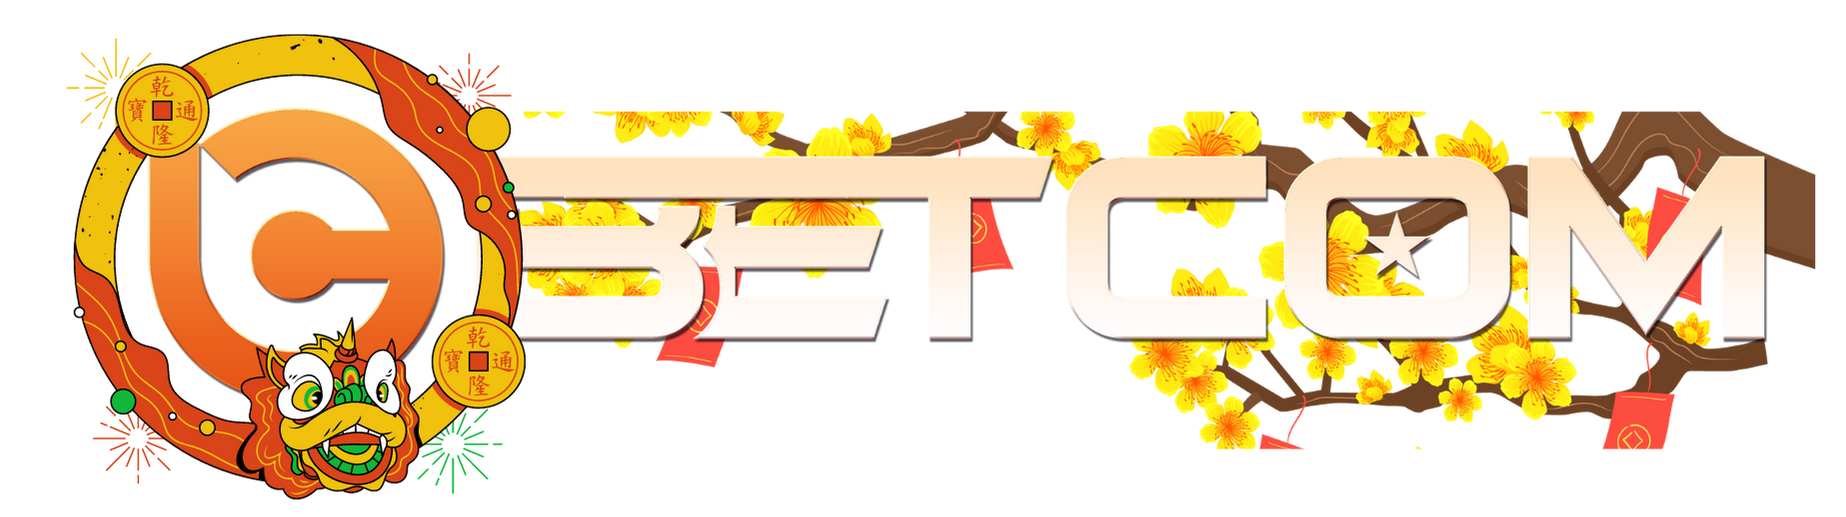 Betcom88